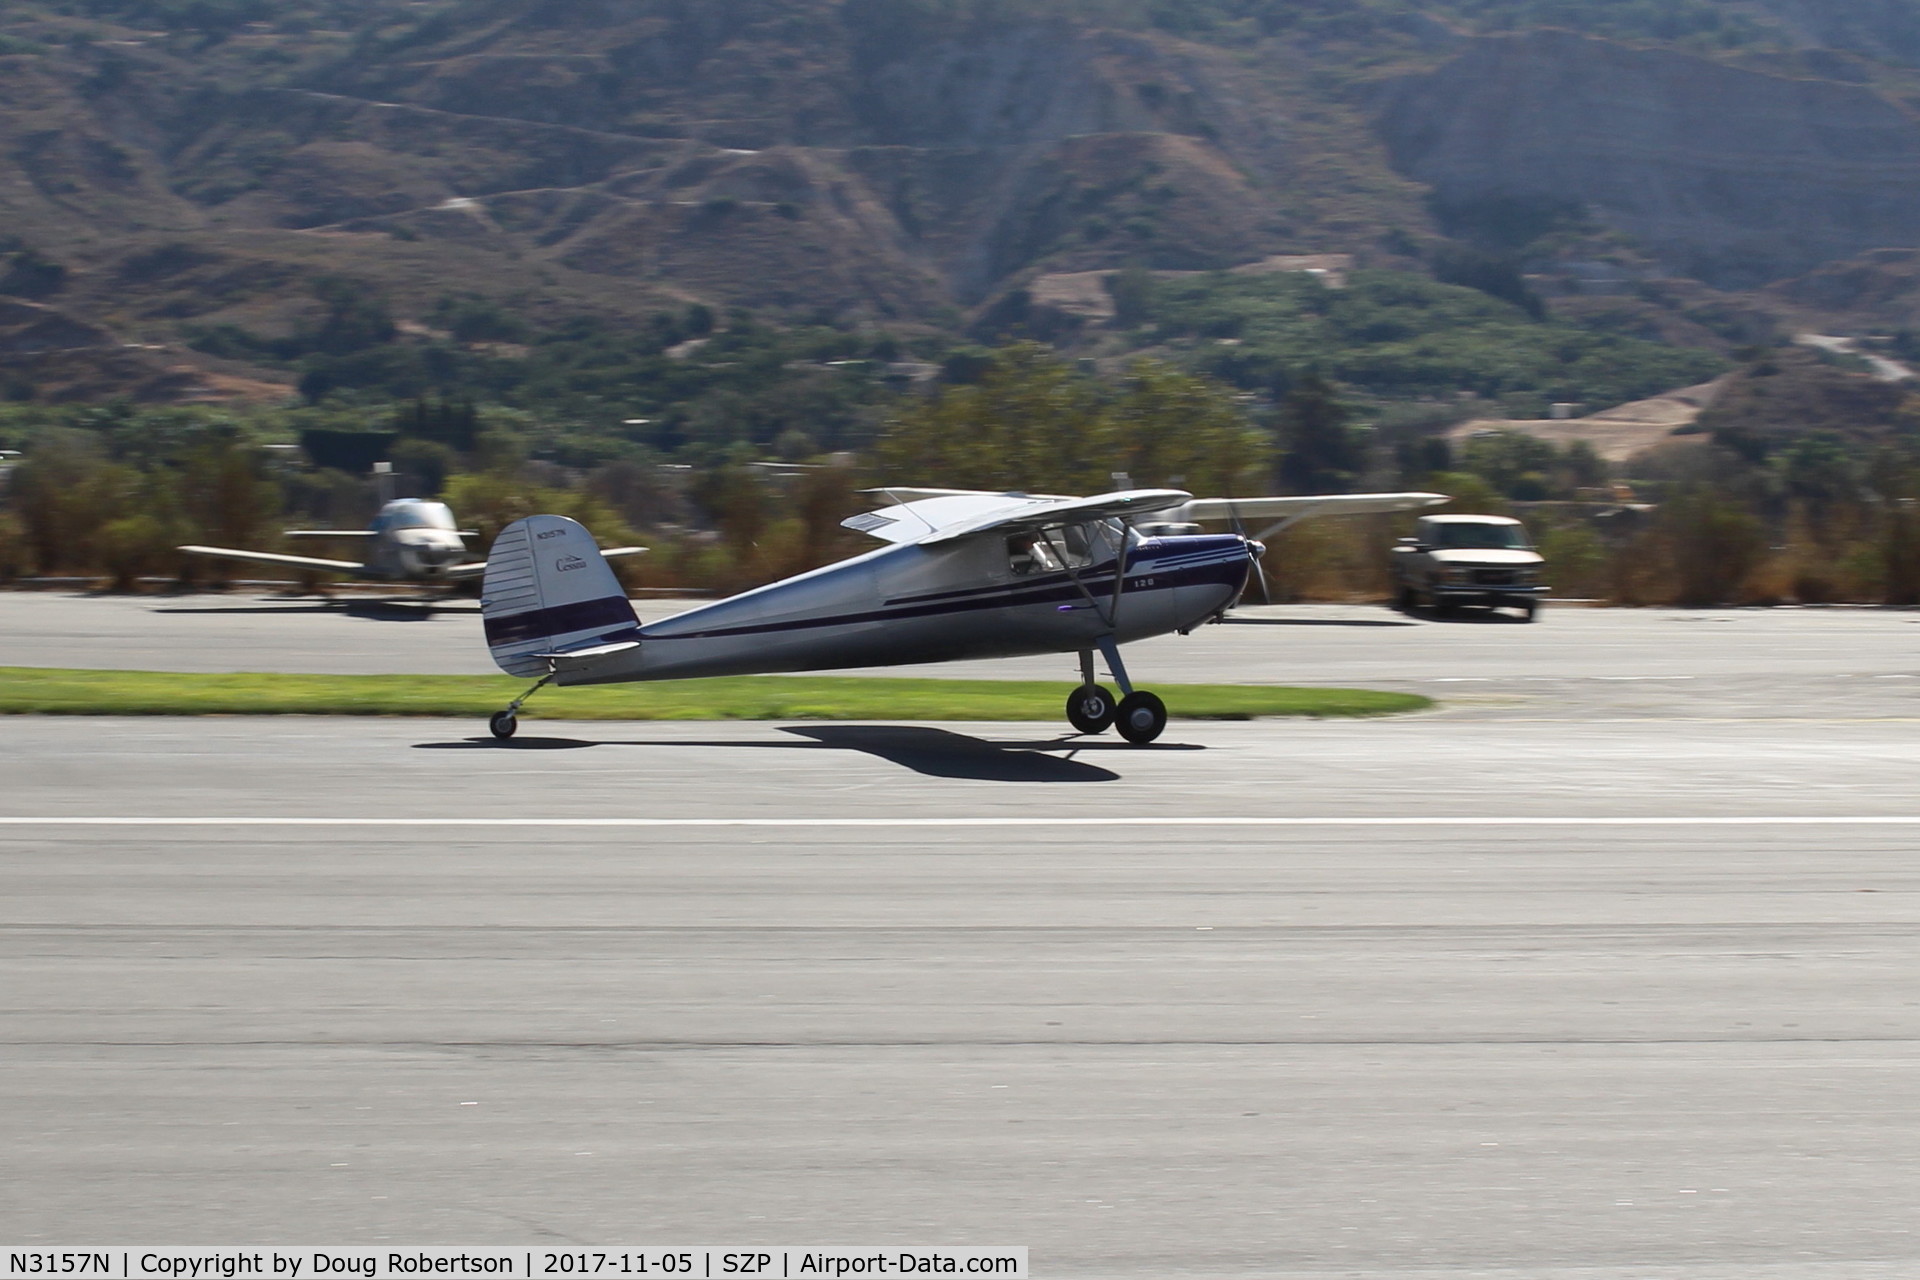 N3157N, 1947 Cessna 120 C/N 13415, 1947 Cessna 120, Continental C85 85 Hp, landing roll Rwy 22